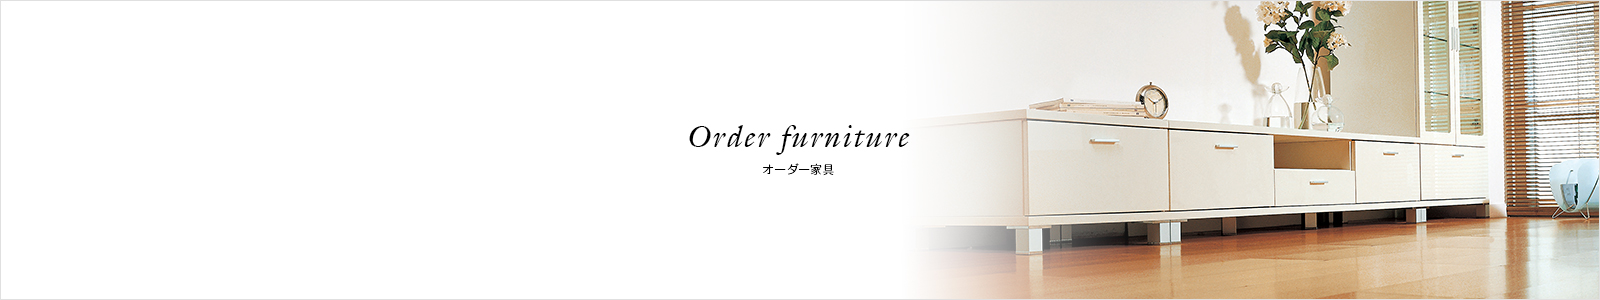 Order furniture オーダー家具